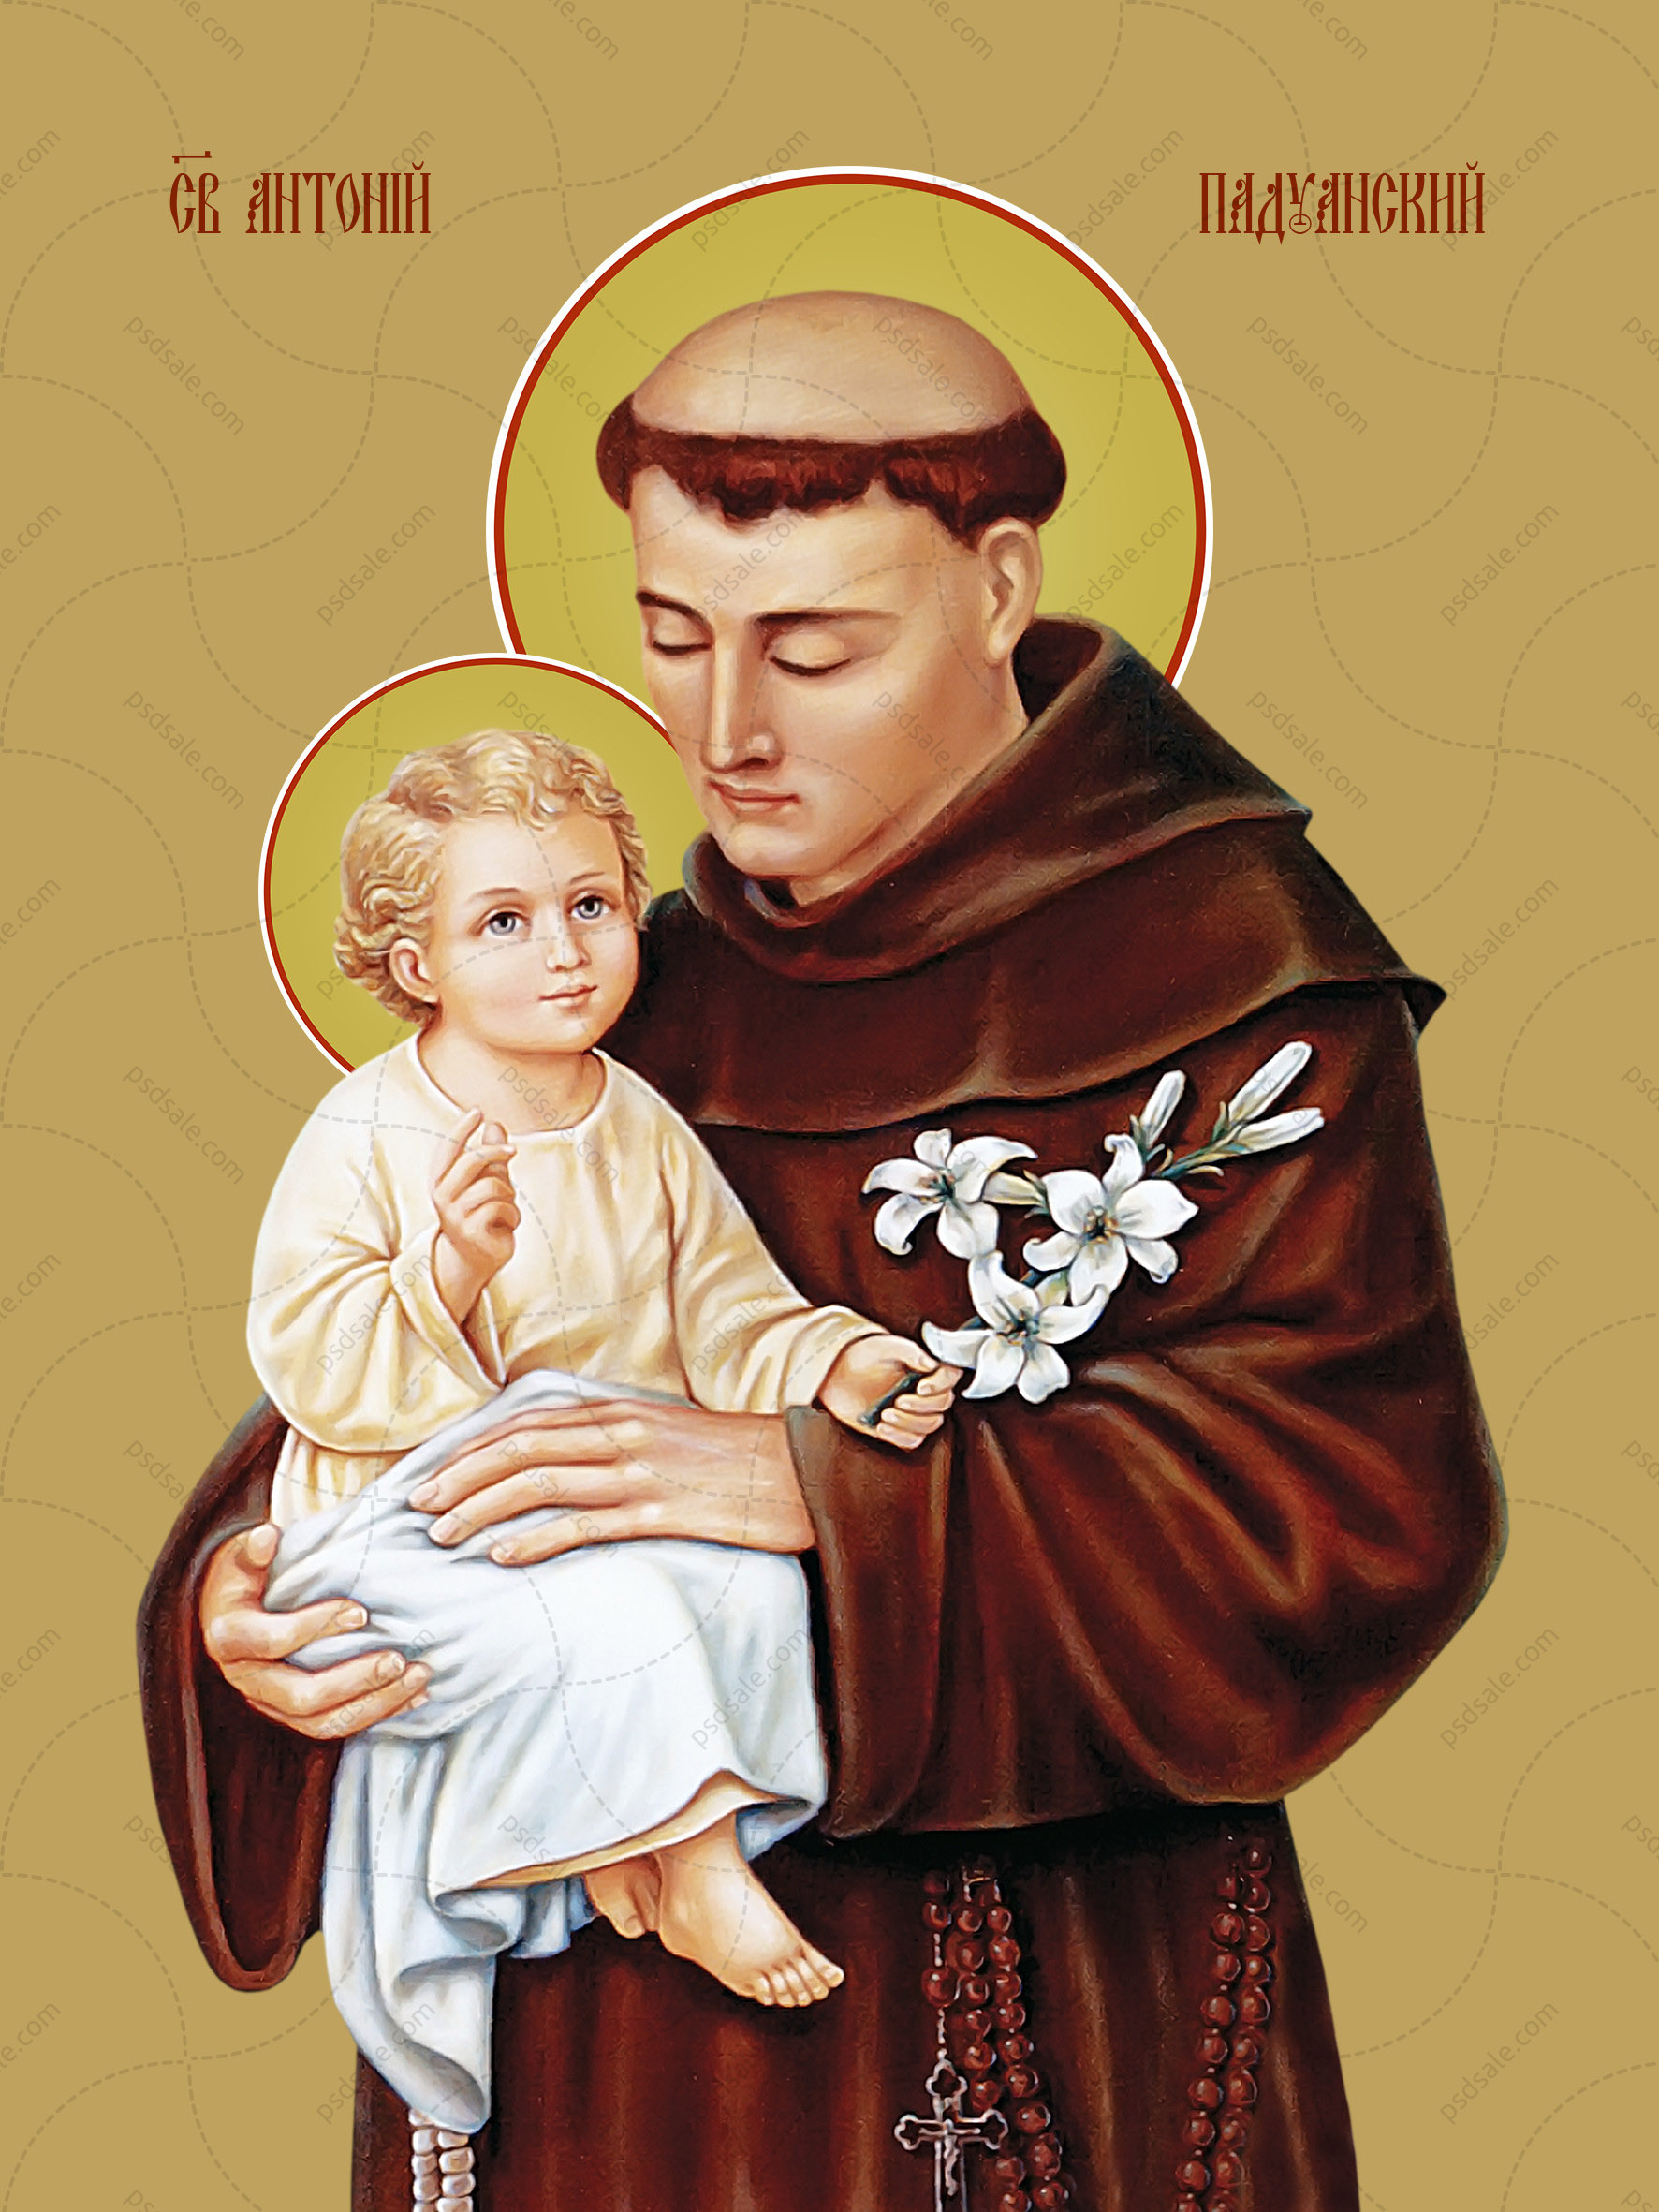 Buy the image of icon: Anthony of Padua, saint